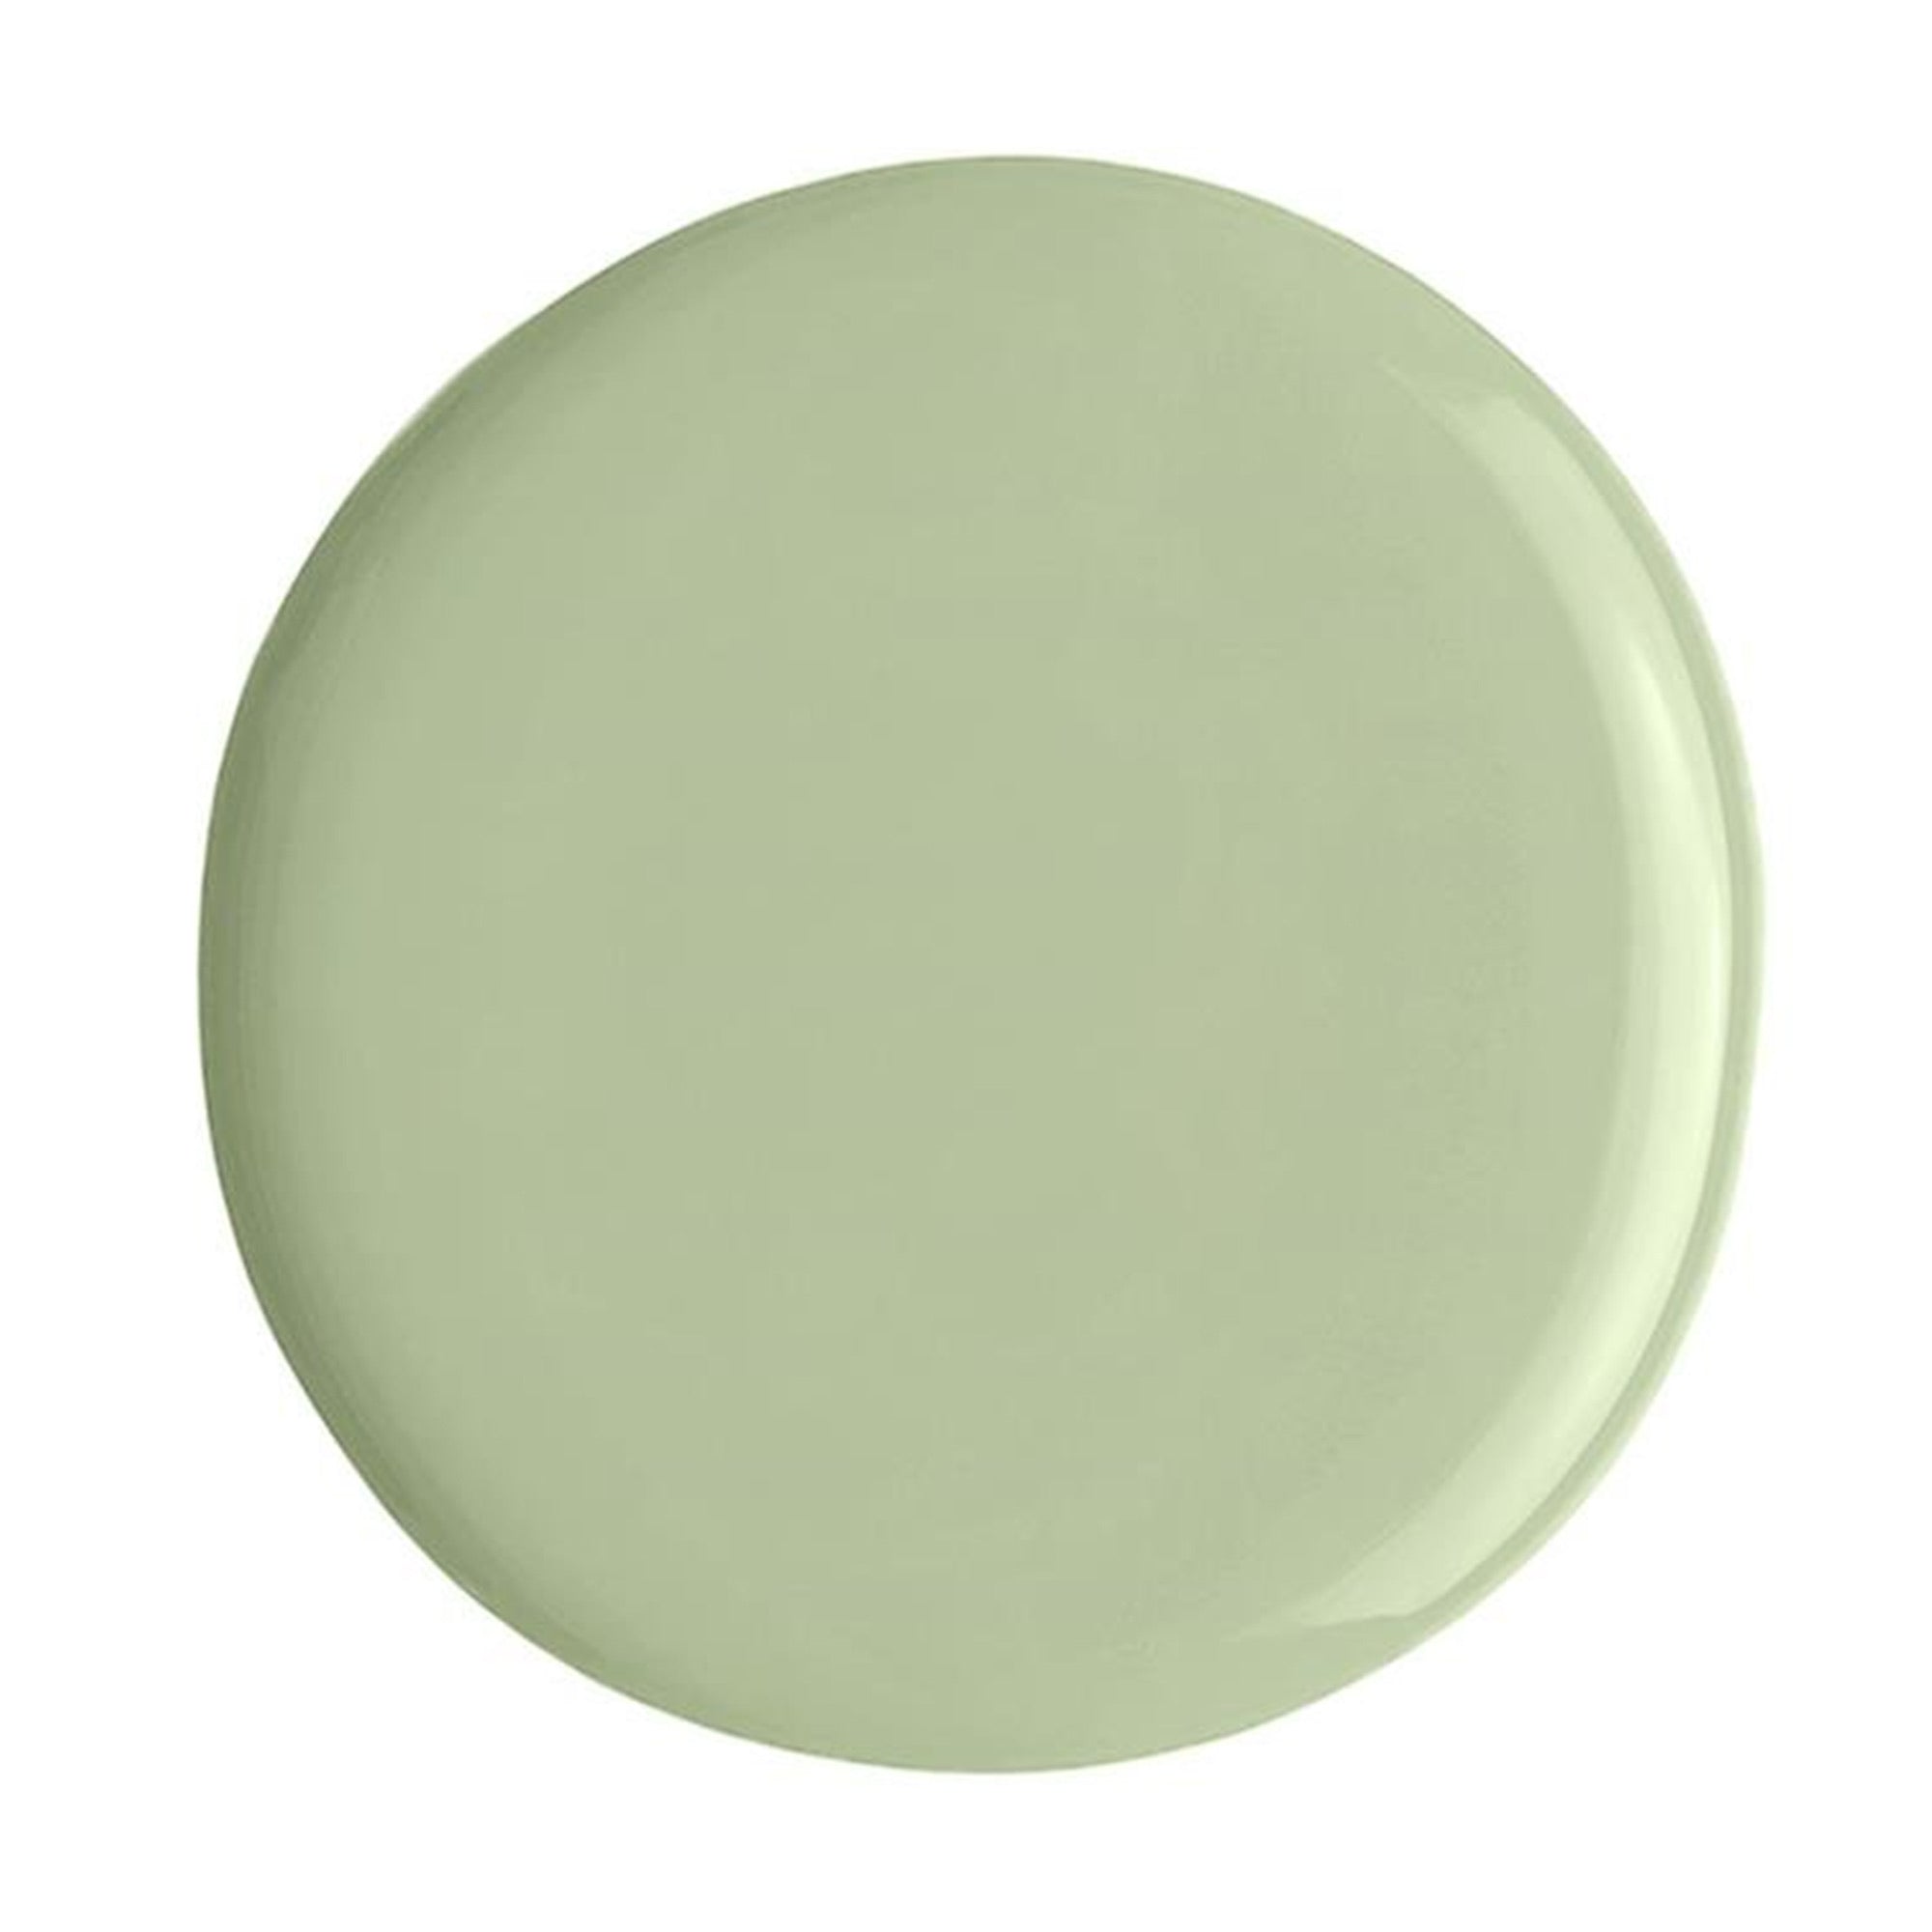 Alix Avien - Nail Polish No.67 (Mint Green)